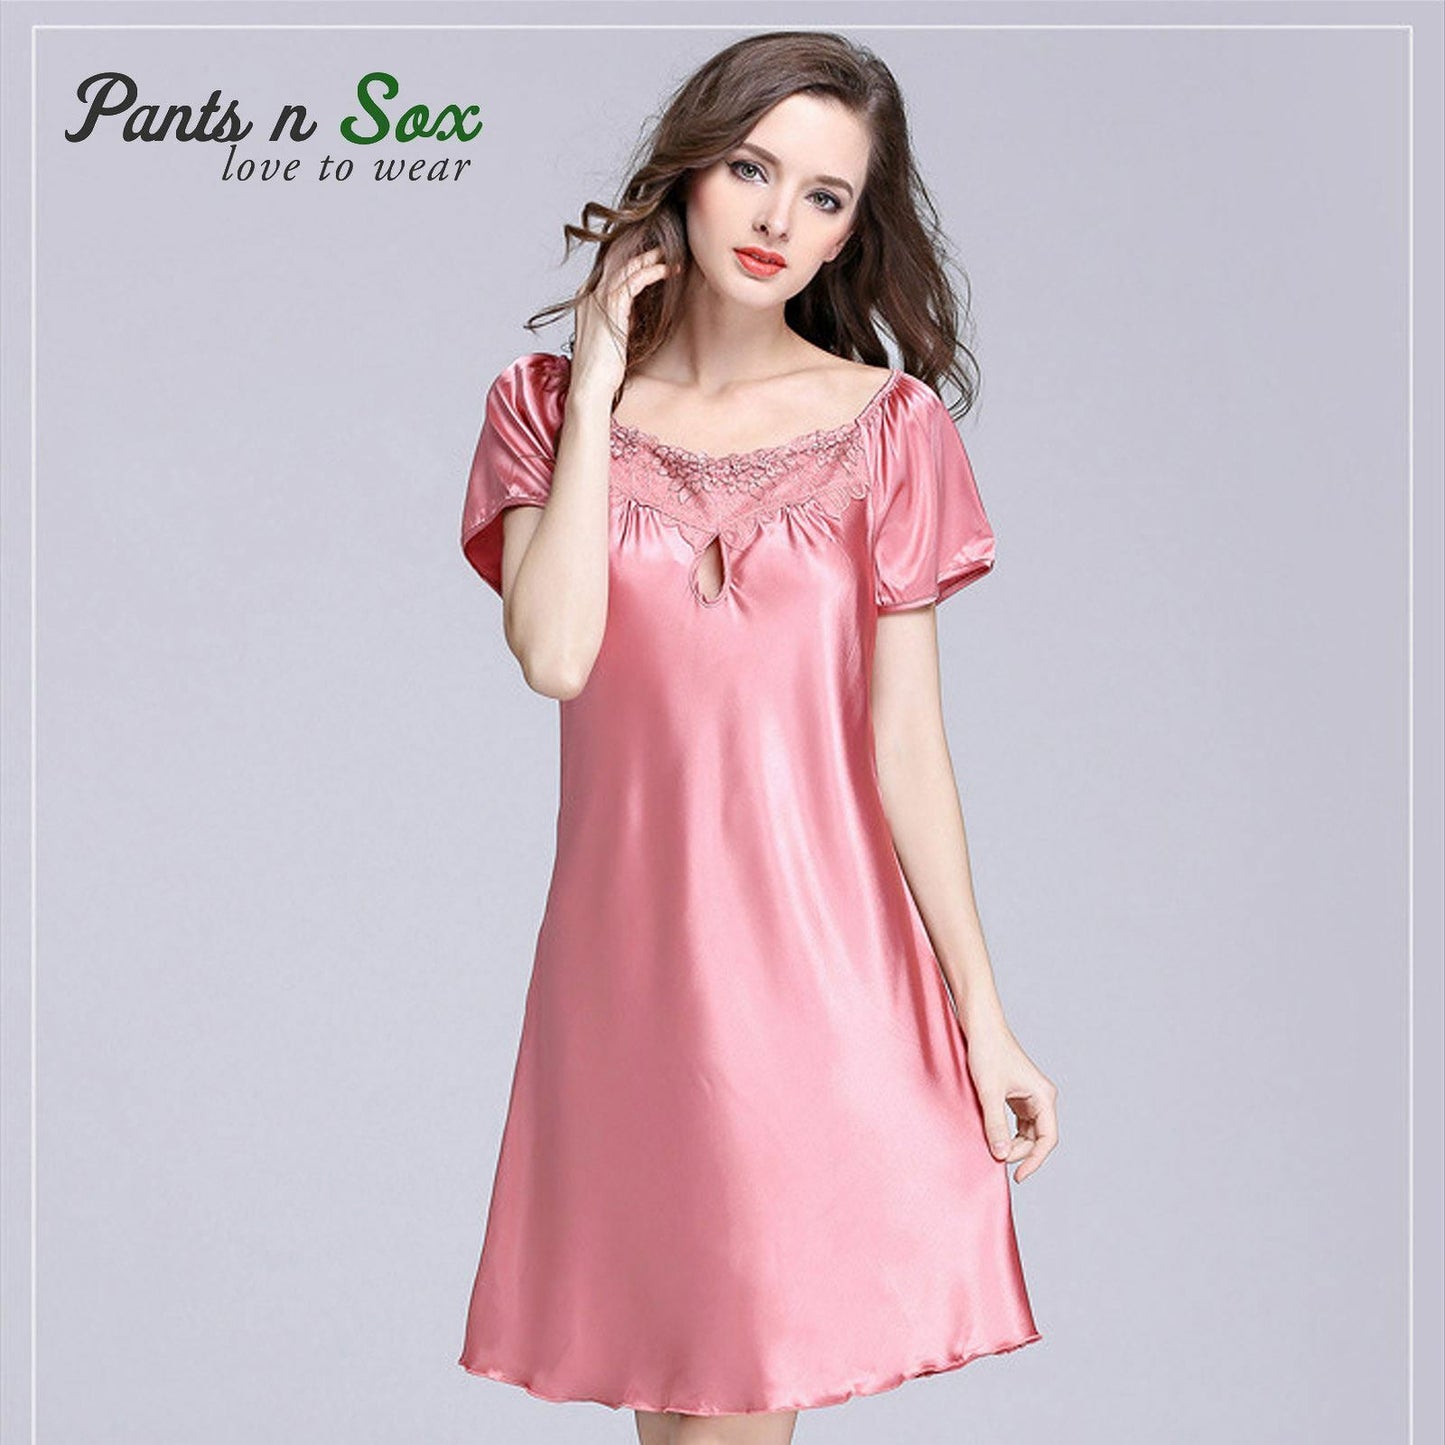 Women Spring Gowns Nightie Silk Feel Sleeveless Ladies Sleepwear Nightdress Pink - Pantsnsox